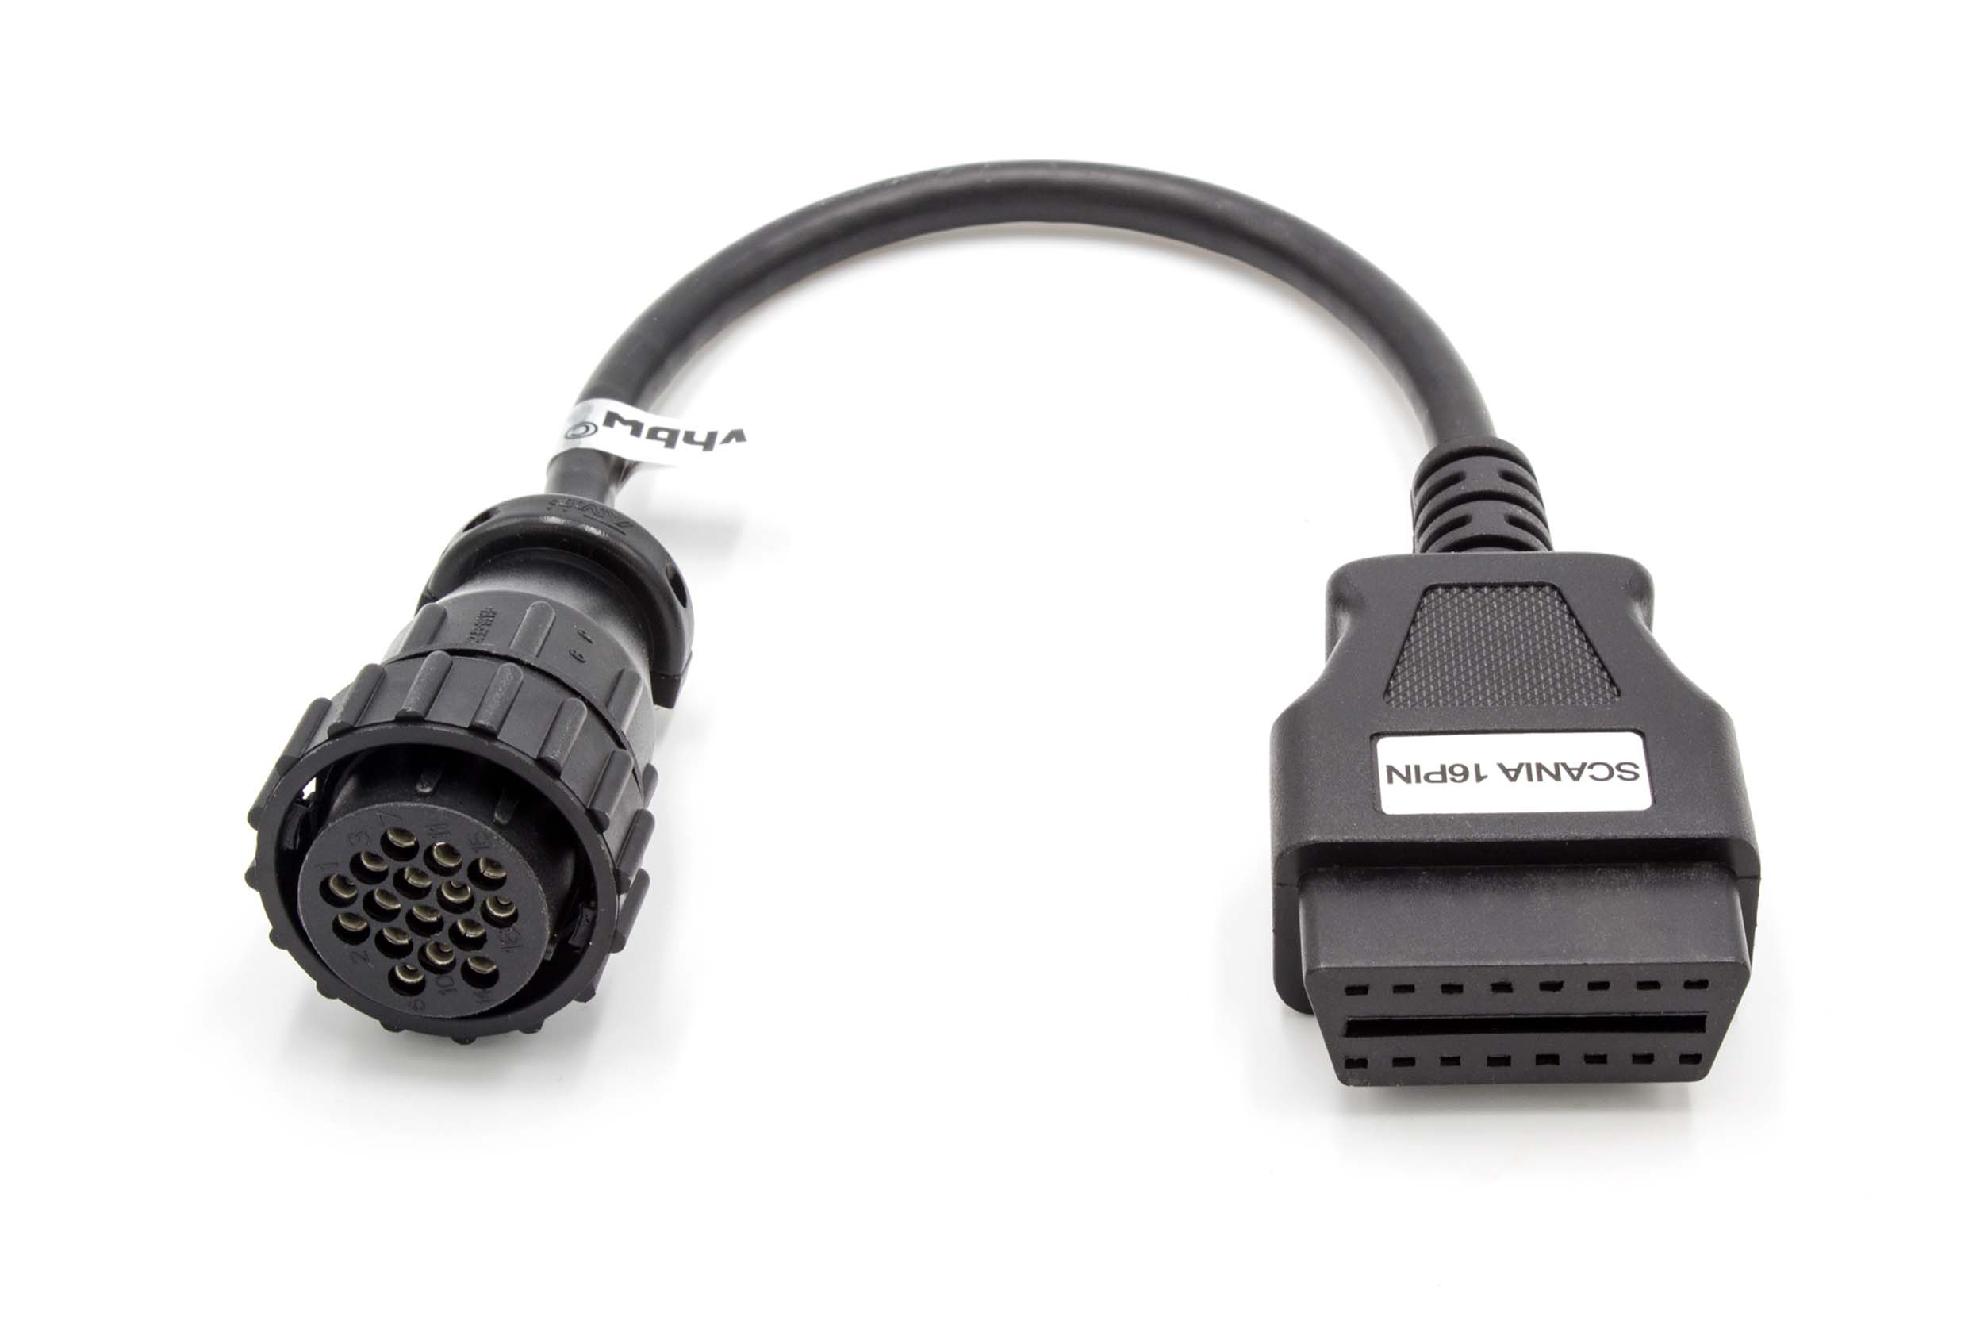 vhbw Adaptateur OBD2 16 pin-OBD1 vers OBD2 compatible avec véhicule SCA - 30 cm